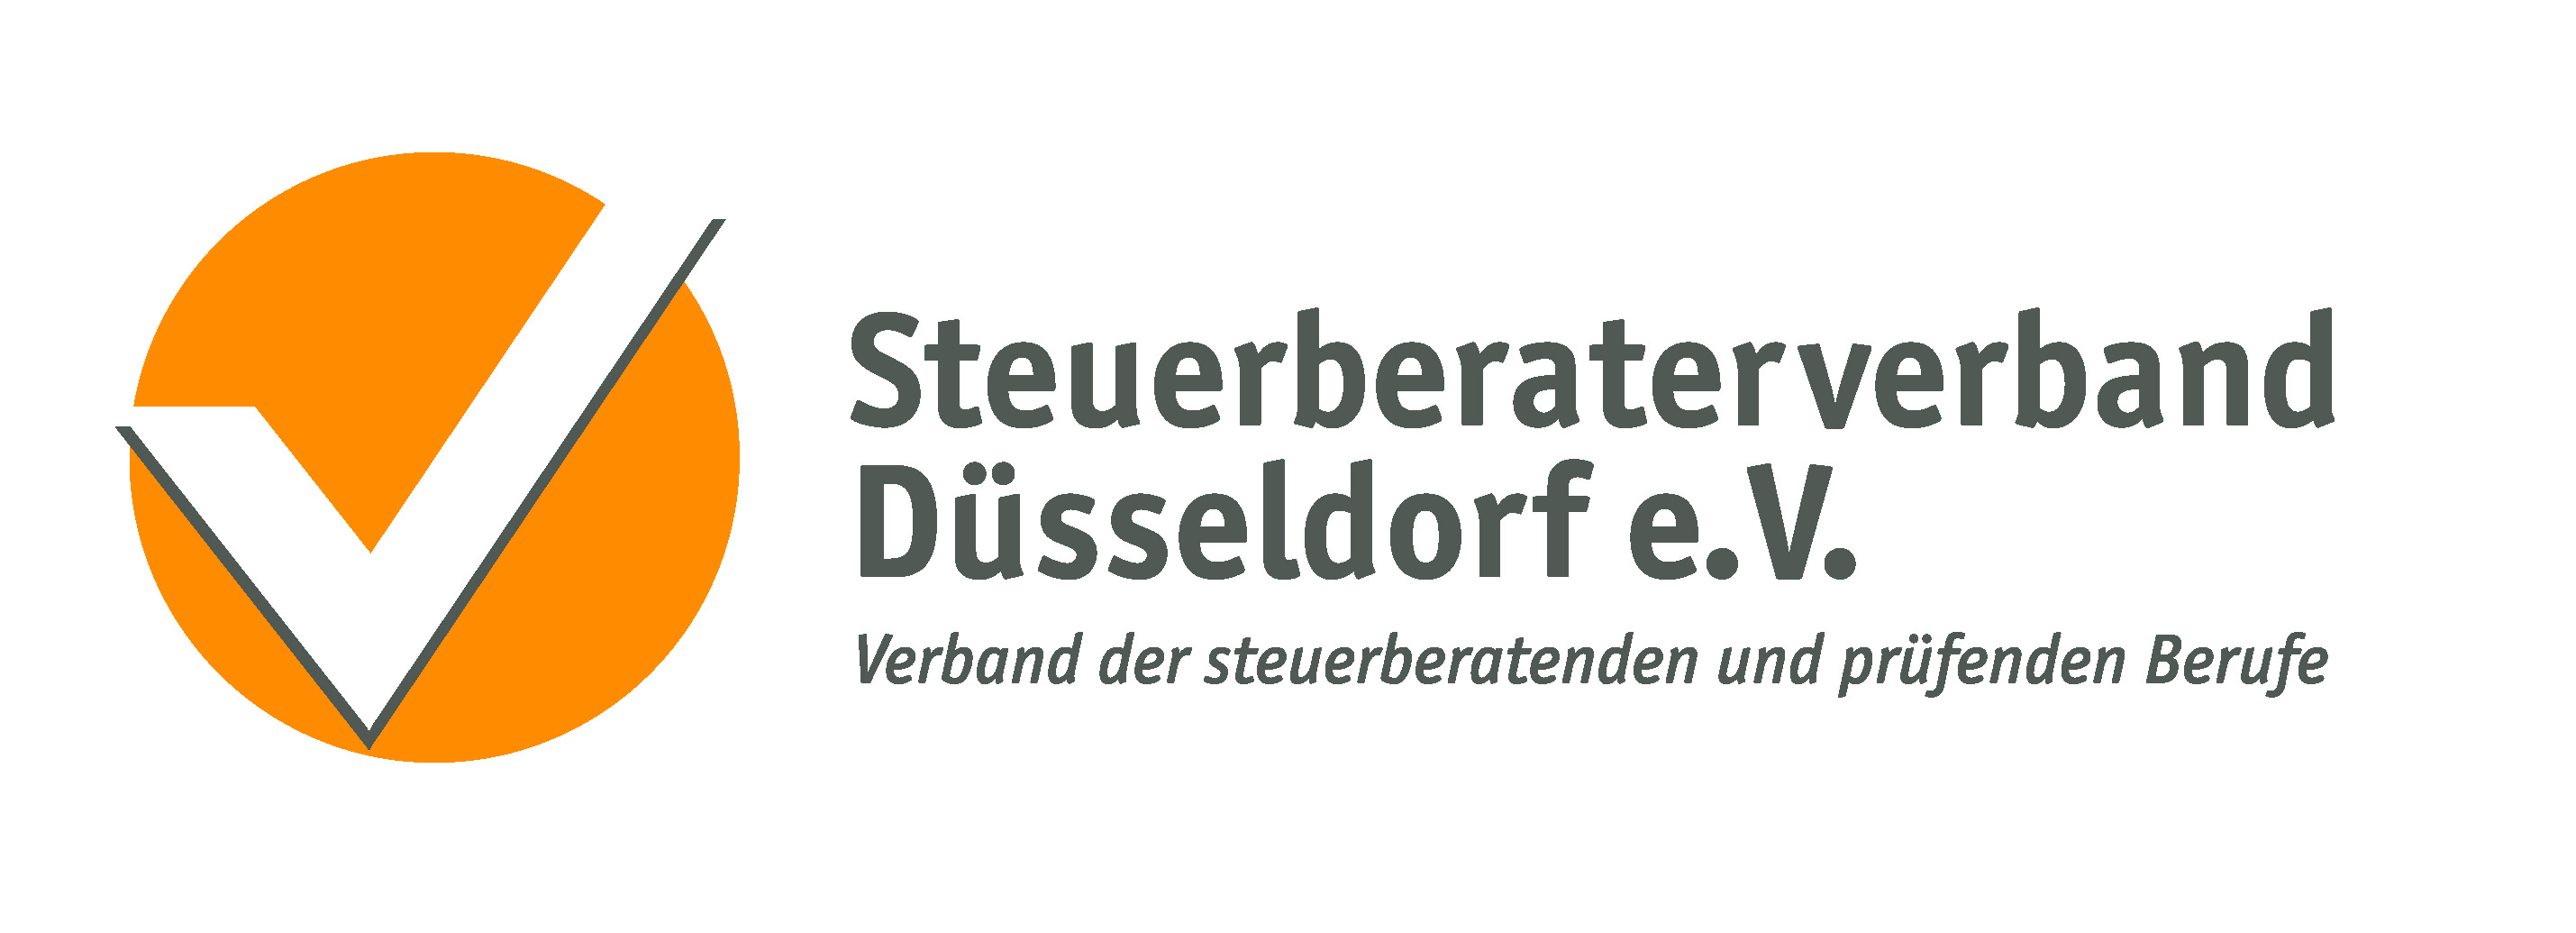 Steuerberaterverband Düsseldorf e.V.